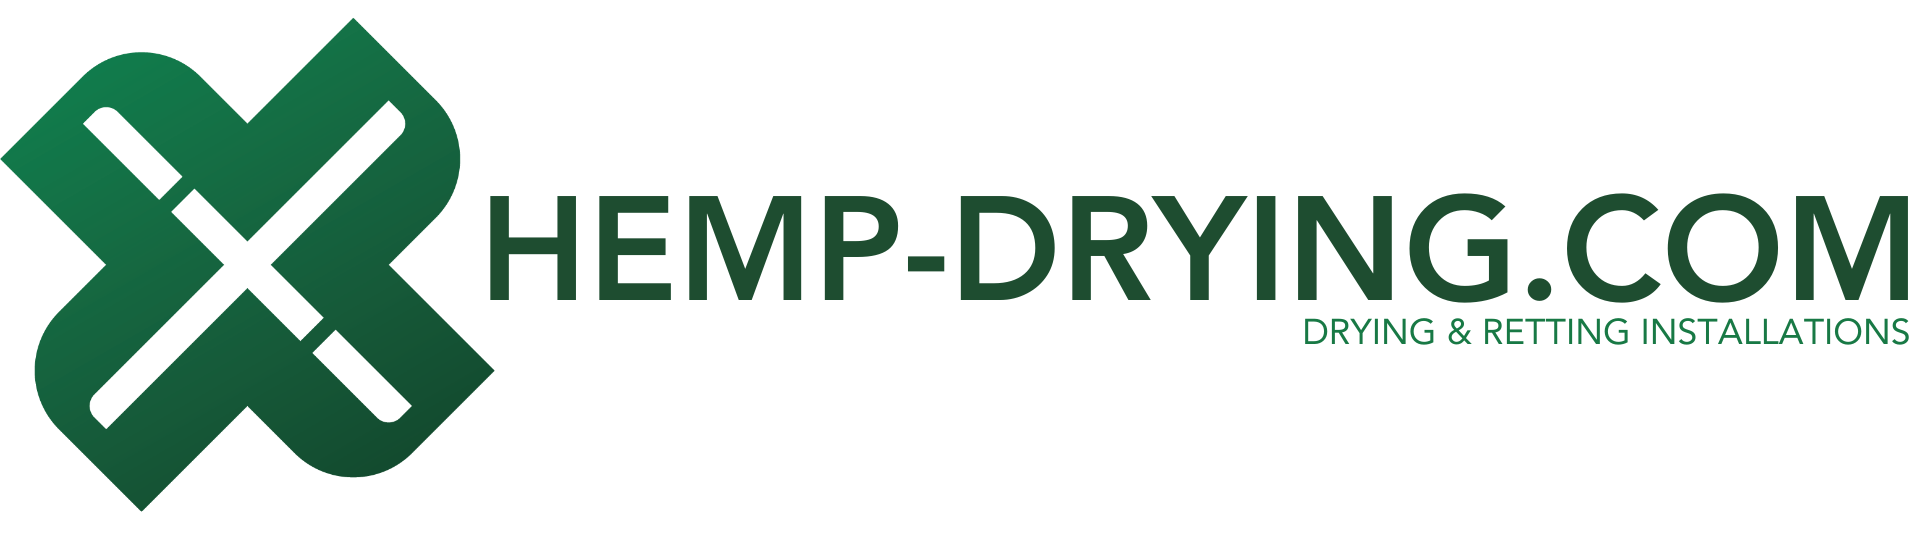 Hemp-Drying.com